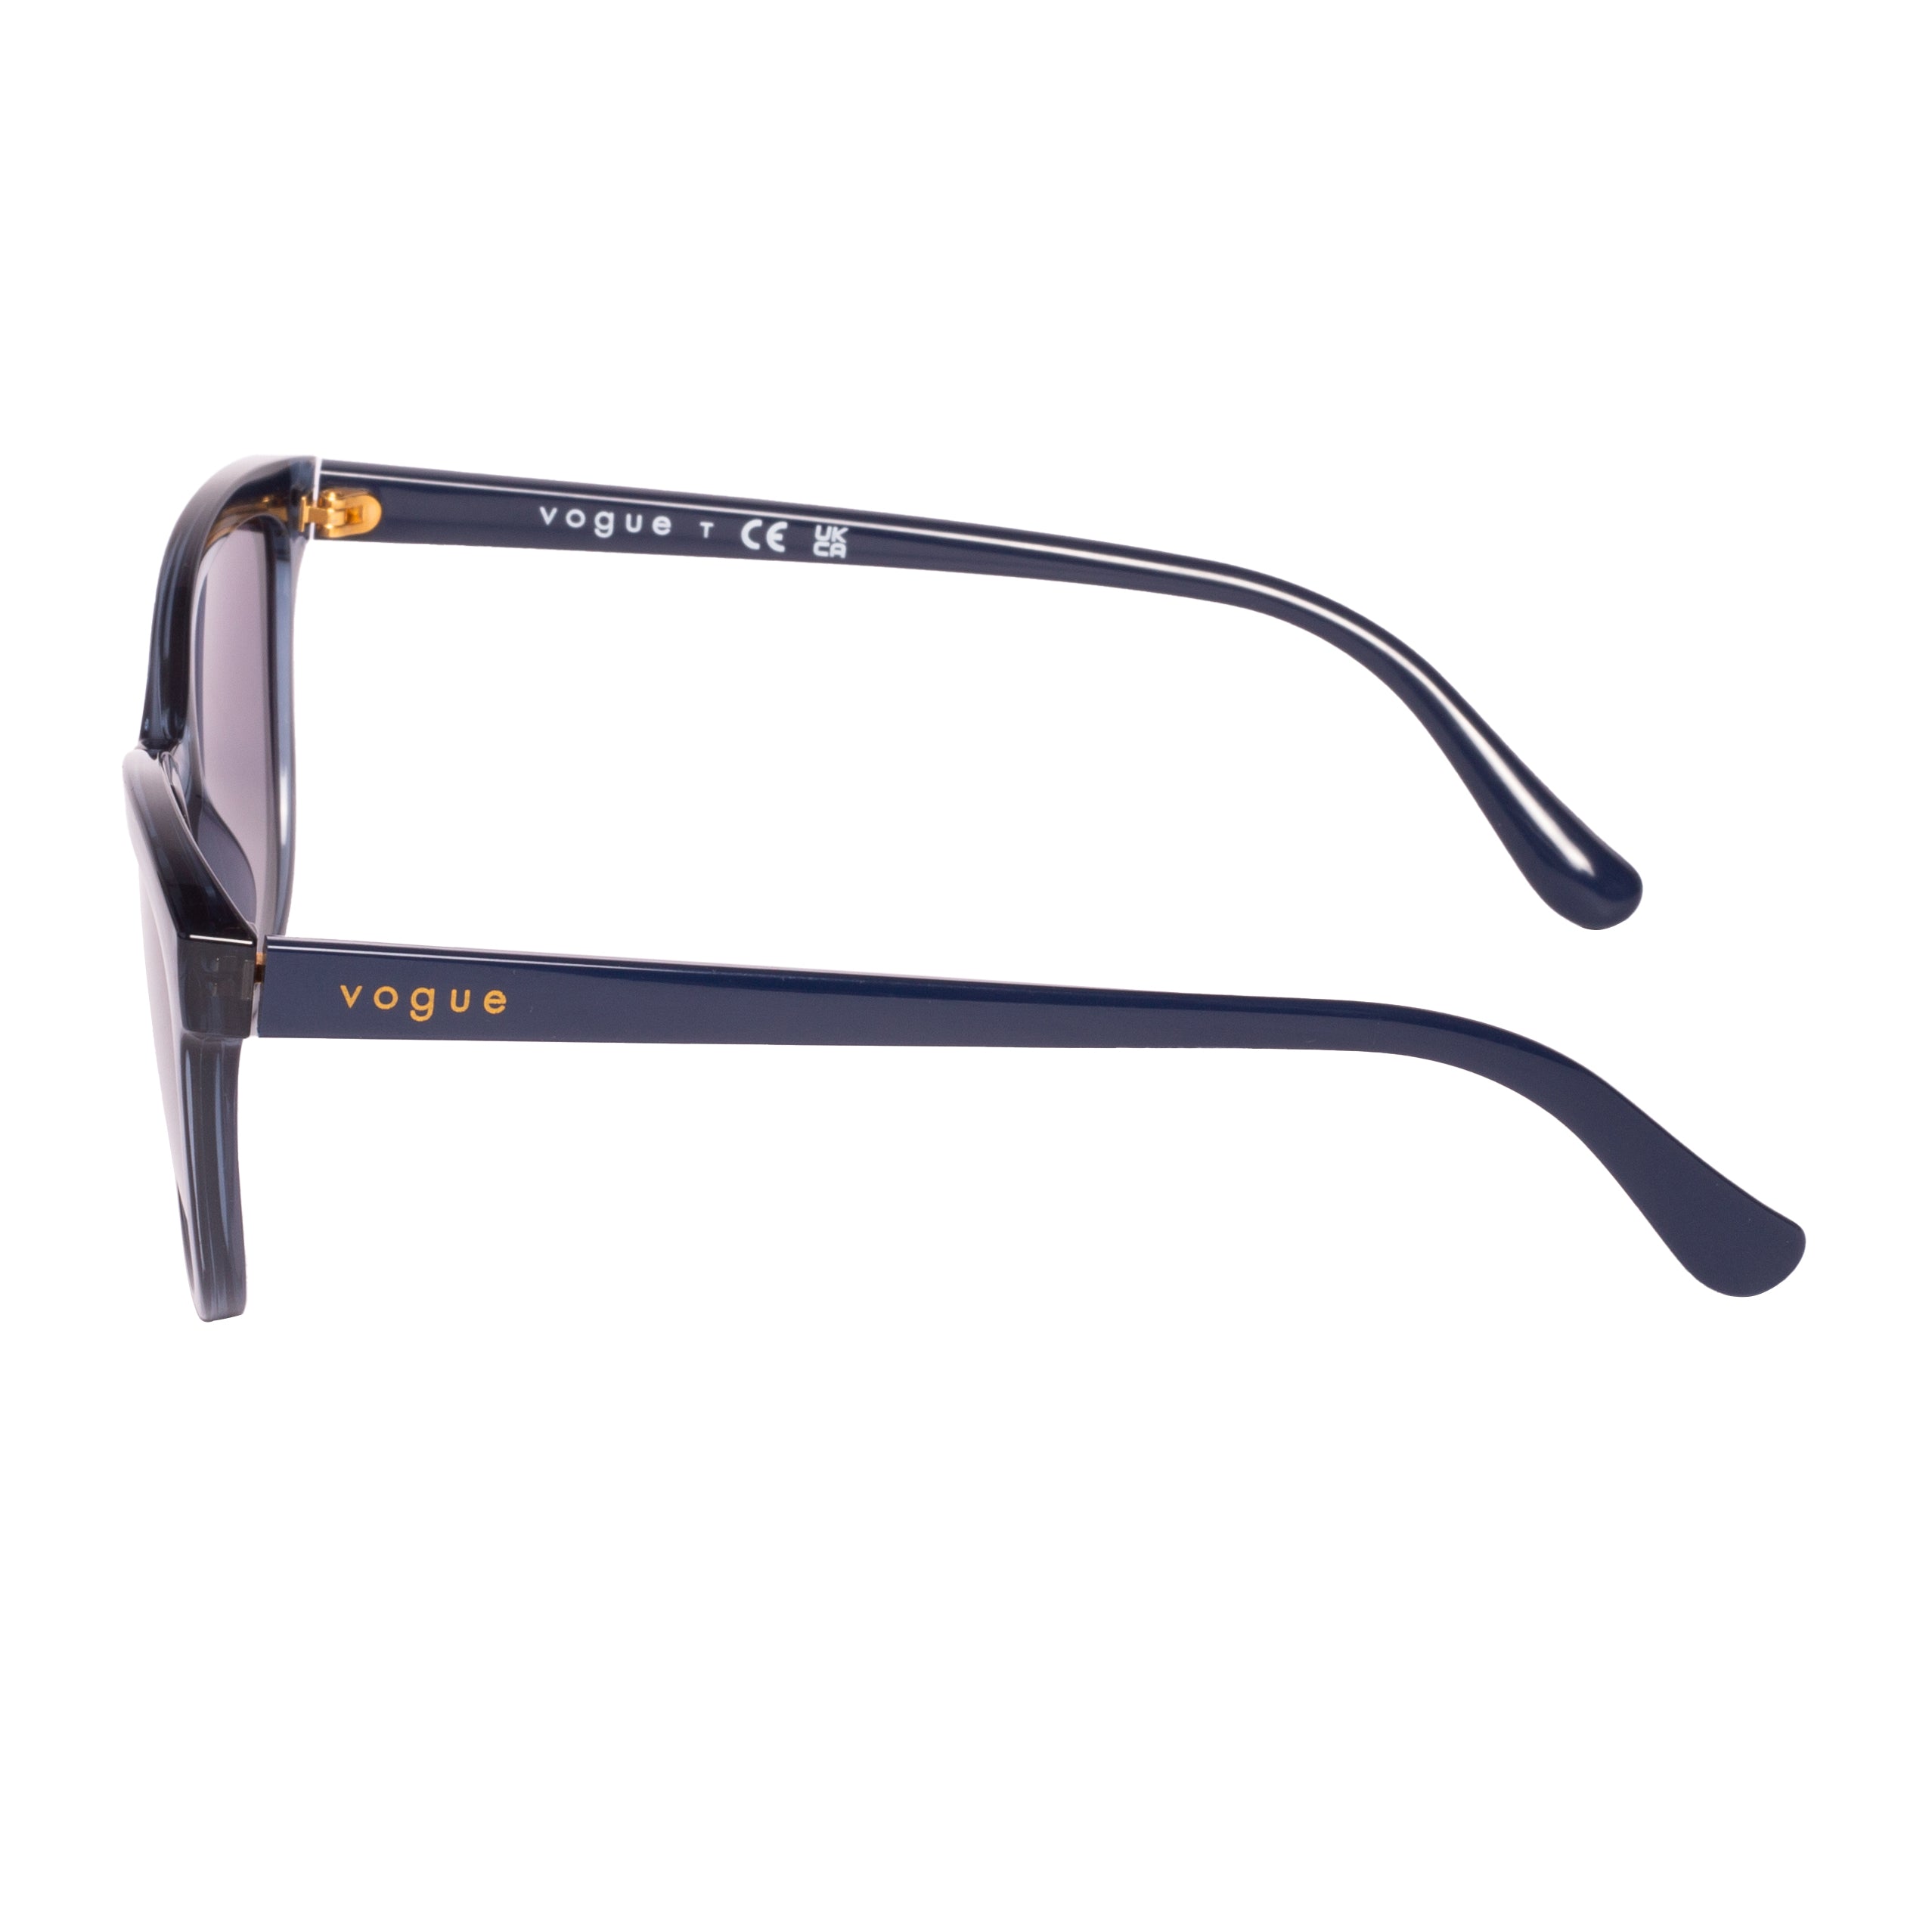 Vogue-VO5496S-54-27644L Sunglasses - Premium Sunglasses from Vogue - Just Rs. 2990! Shop now at Laxmi Opticians